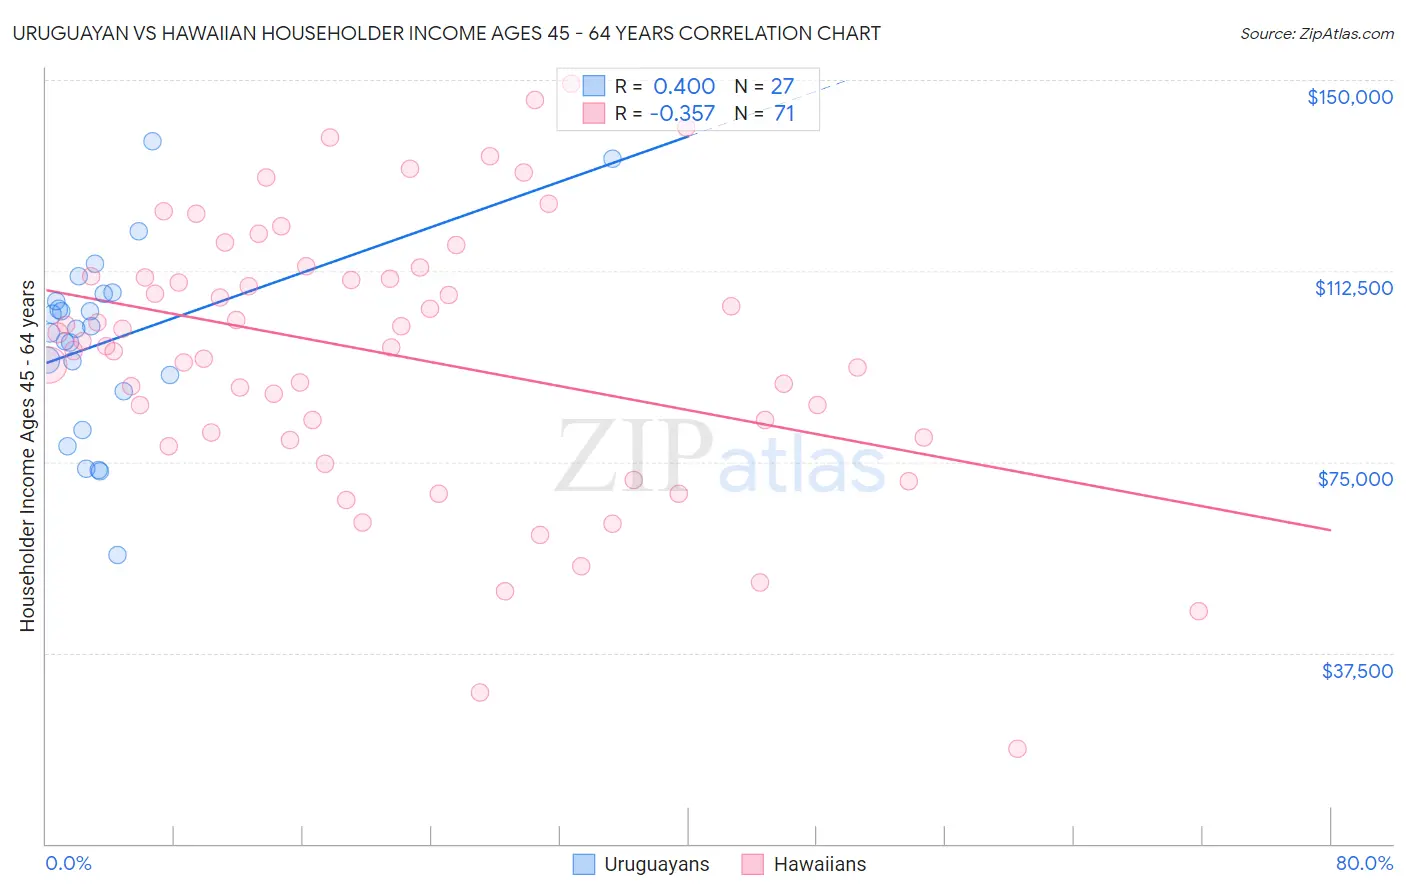 Uruguayan vs Hawaiian Householder Income Ages 45 - 64 years